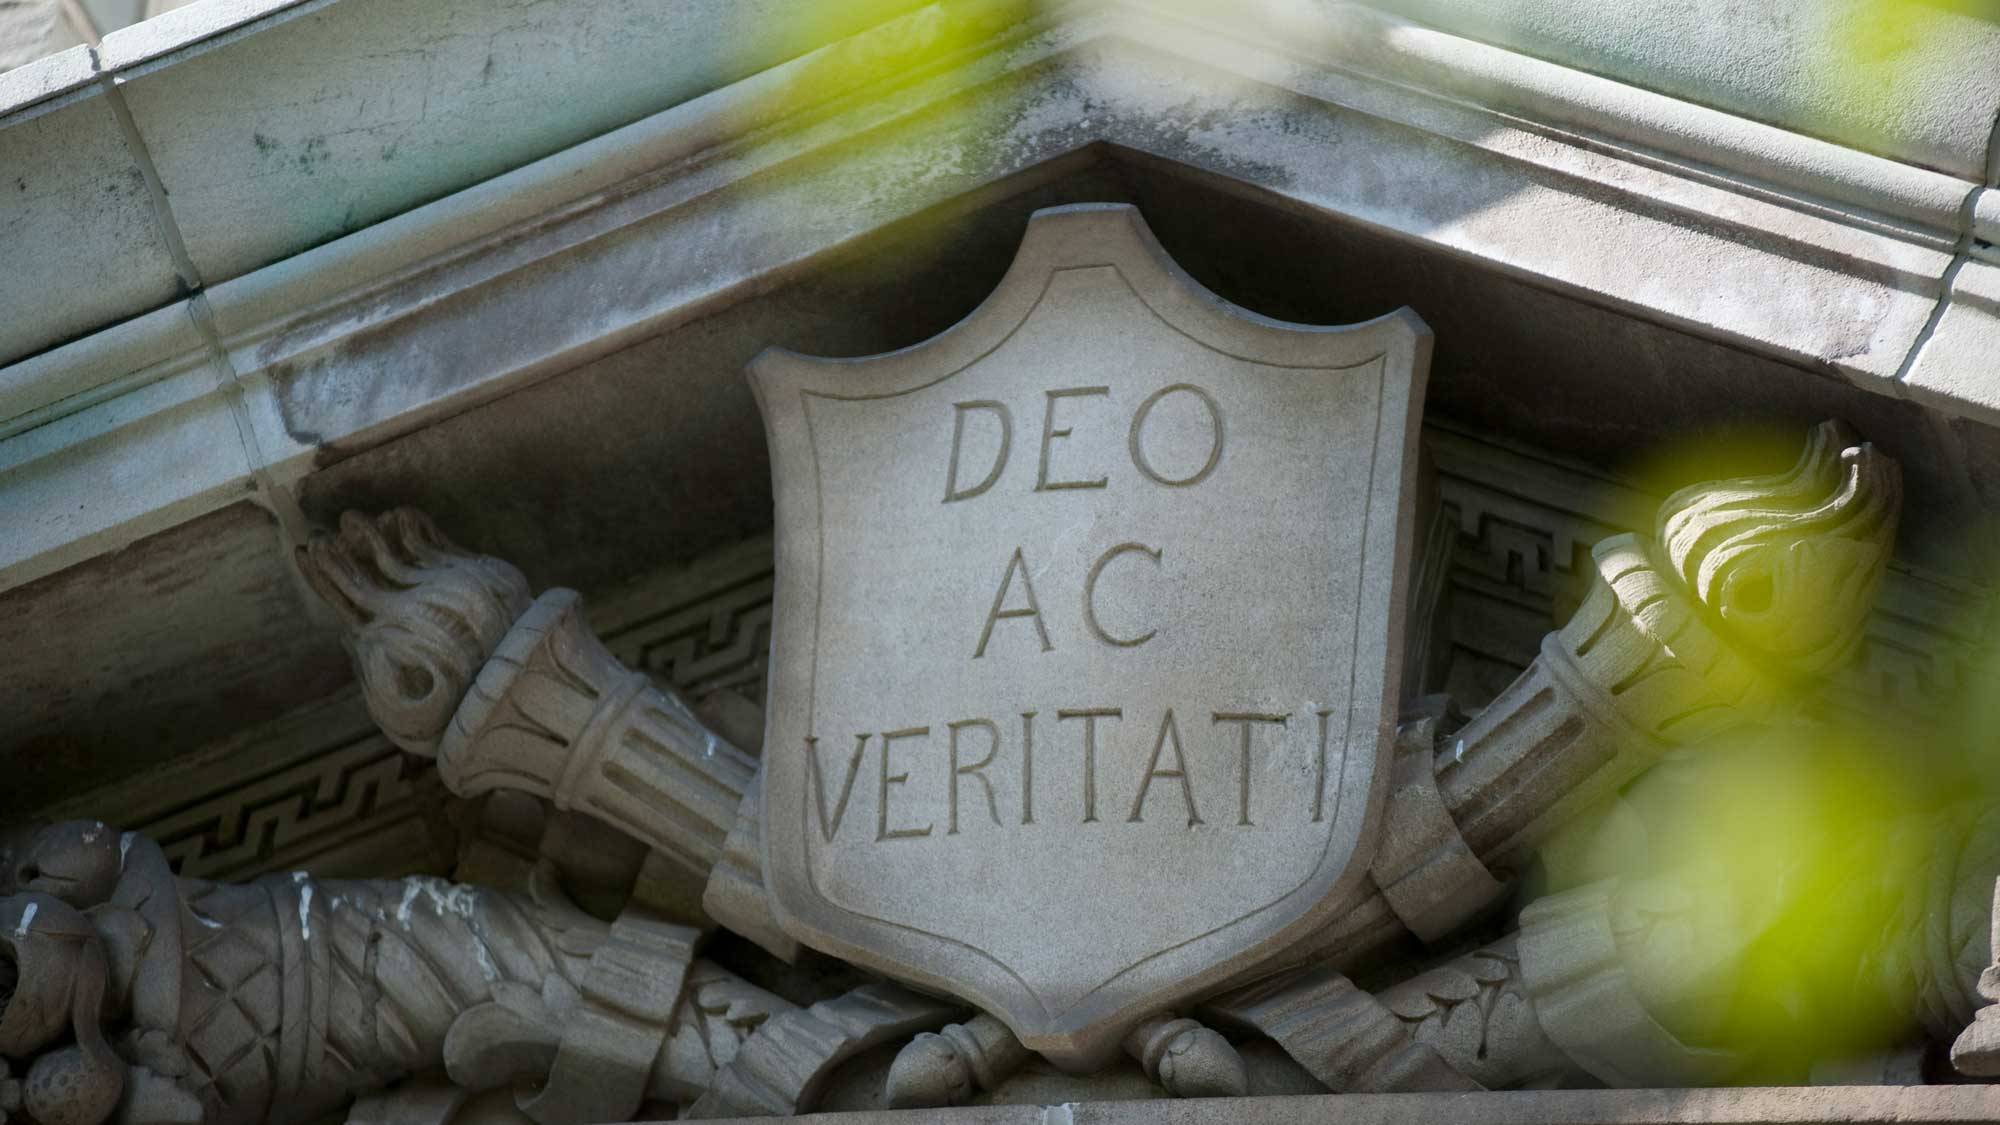 deo ac veritati inscribed on stone shield